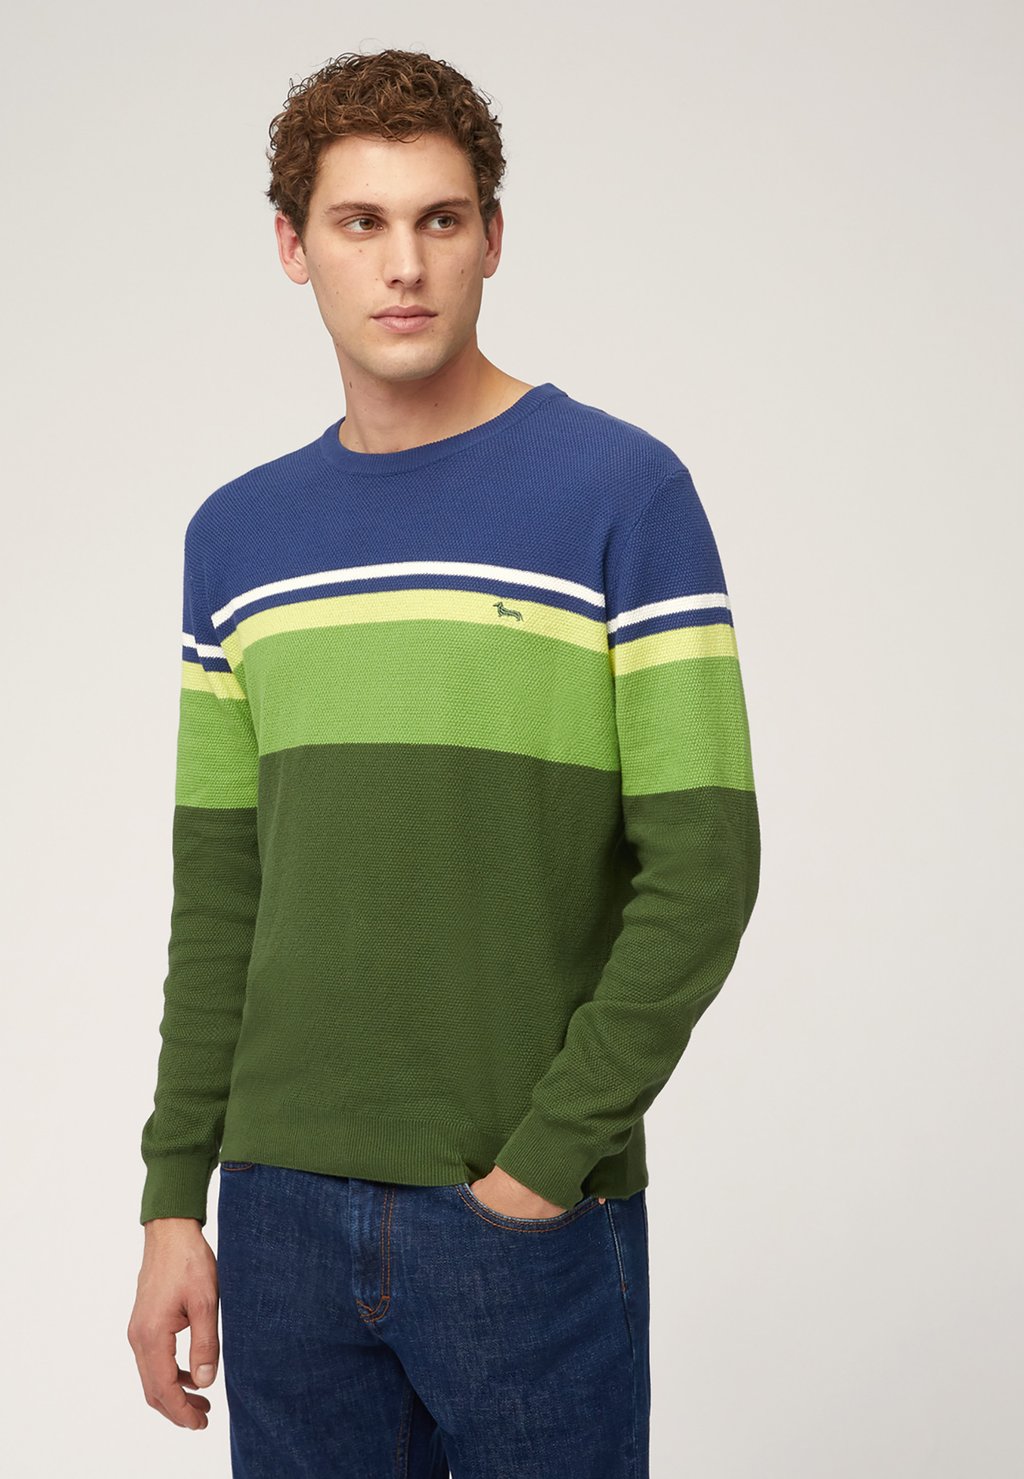 Вязаный свитер A RIGHE Harmont & Blaine, оливково-зеленый